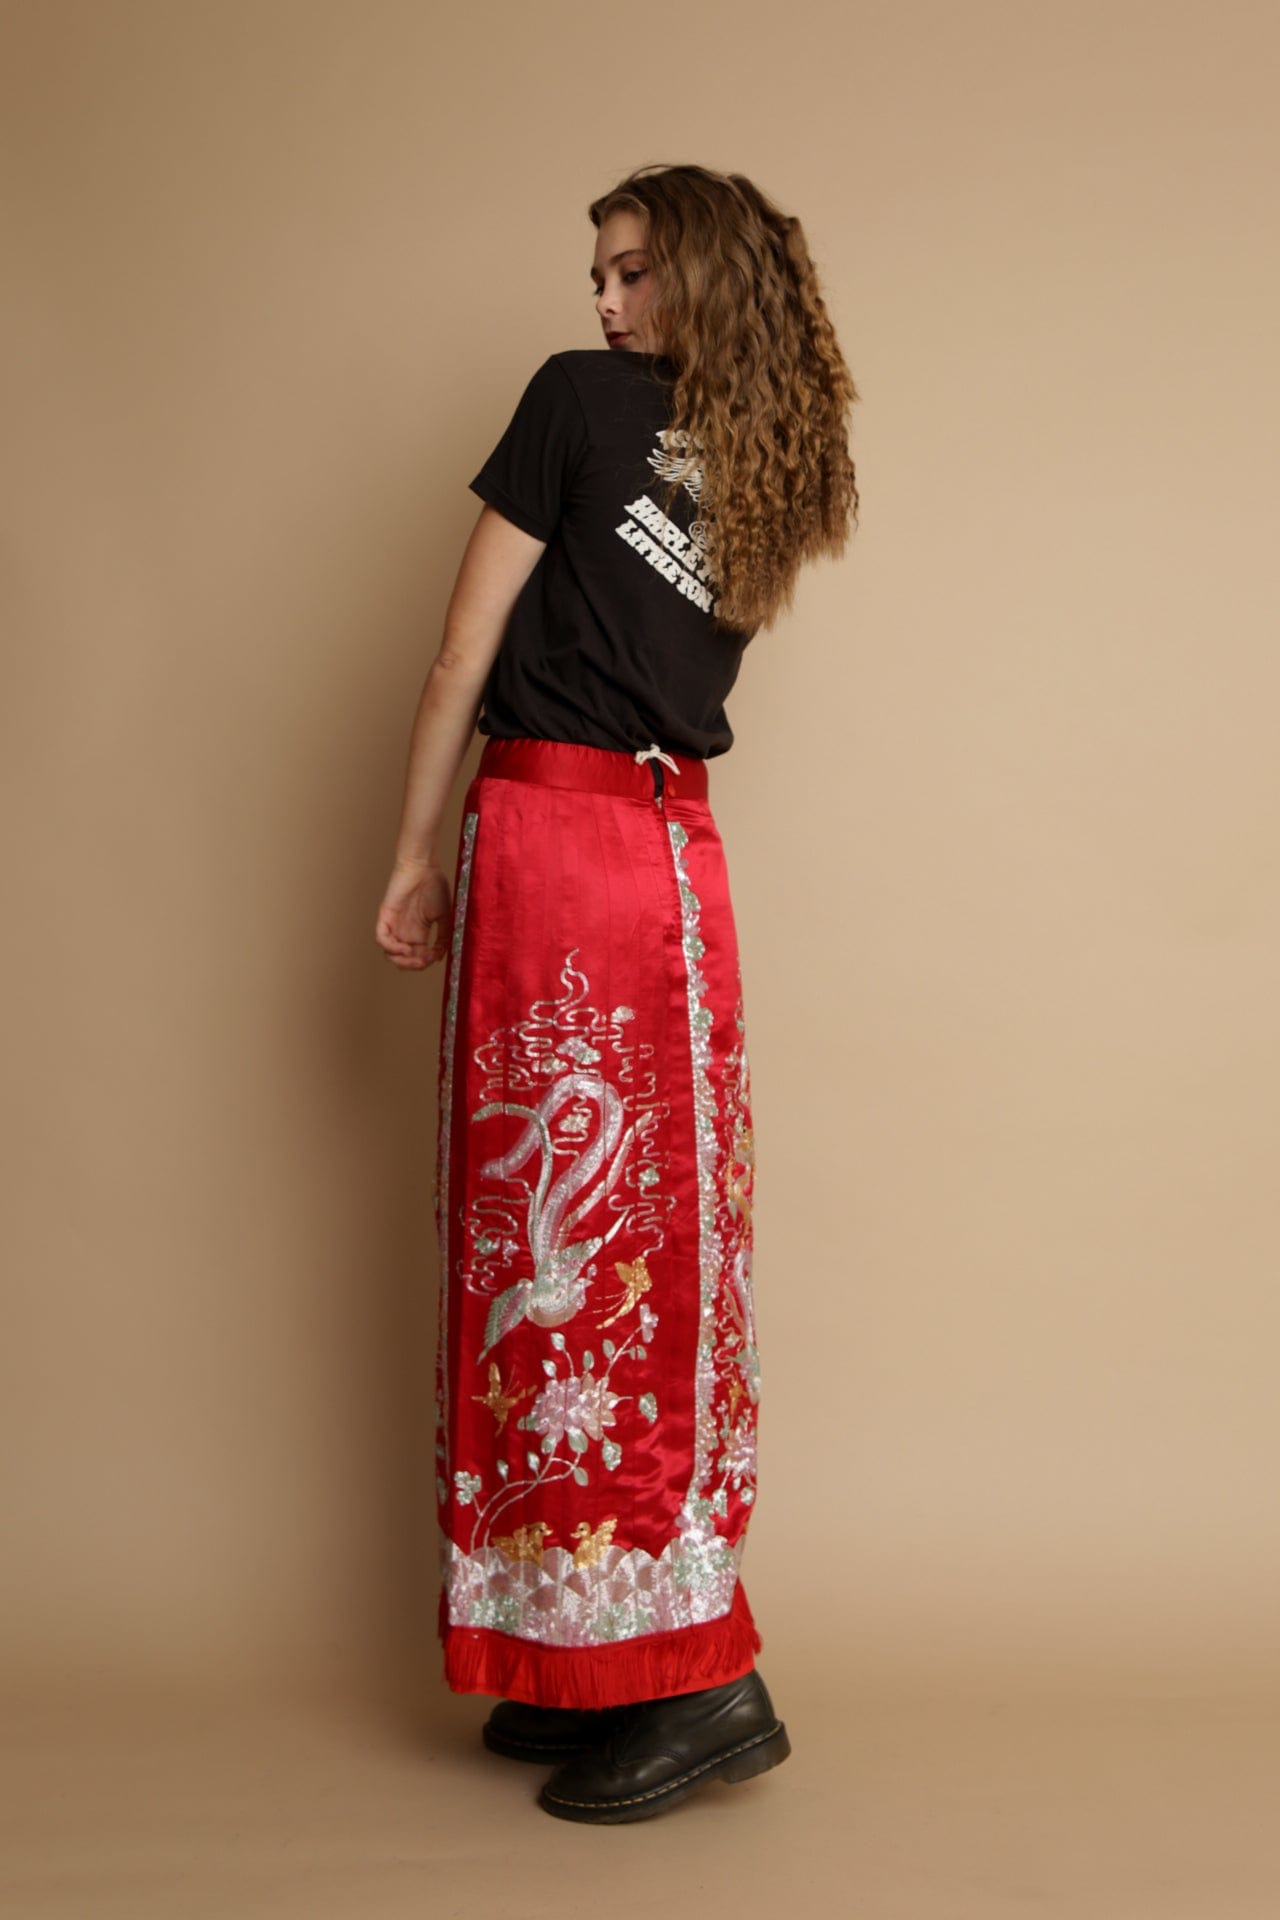 SisterGolden Dress Lucky Dragon Skirt/Dress